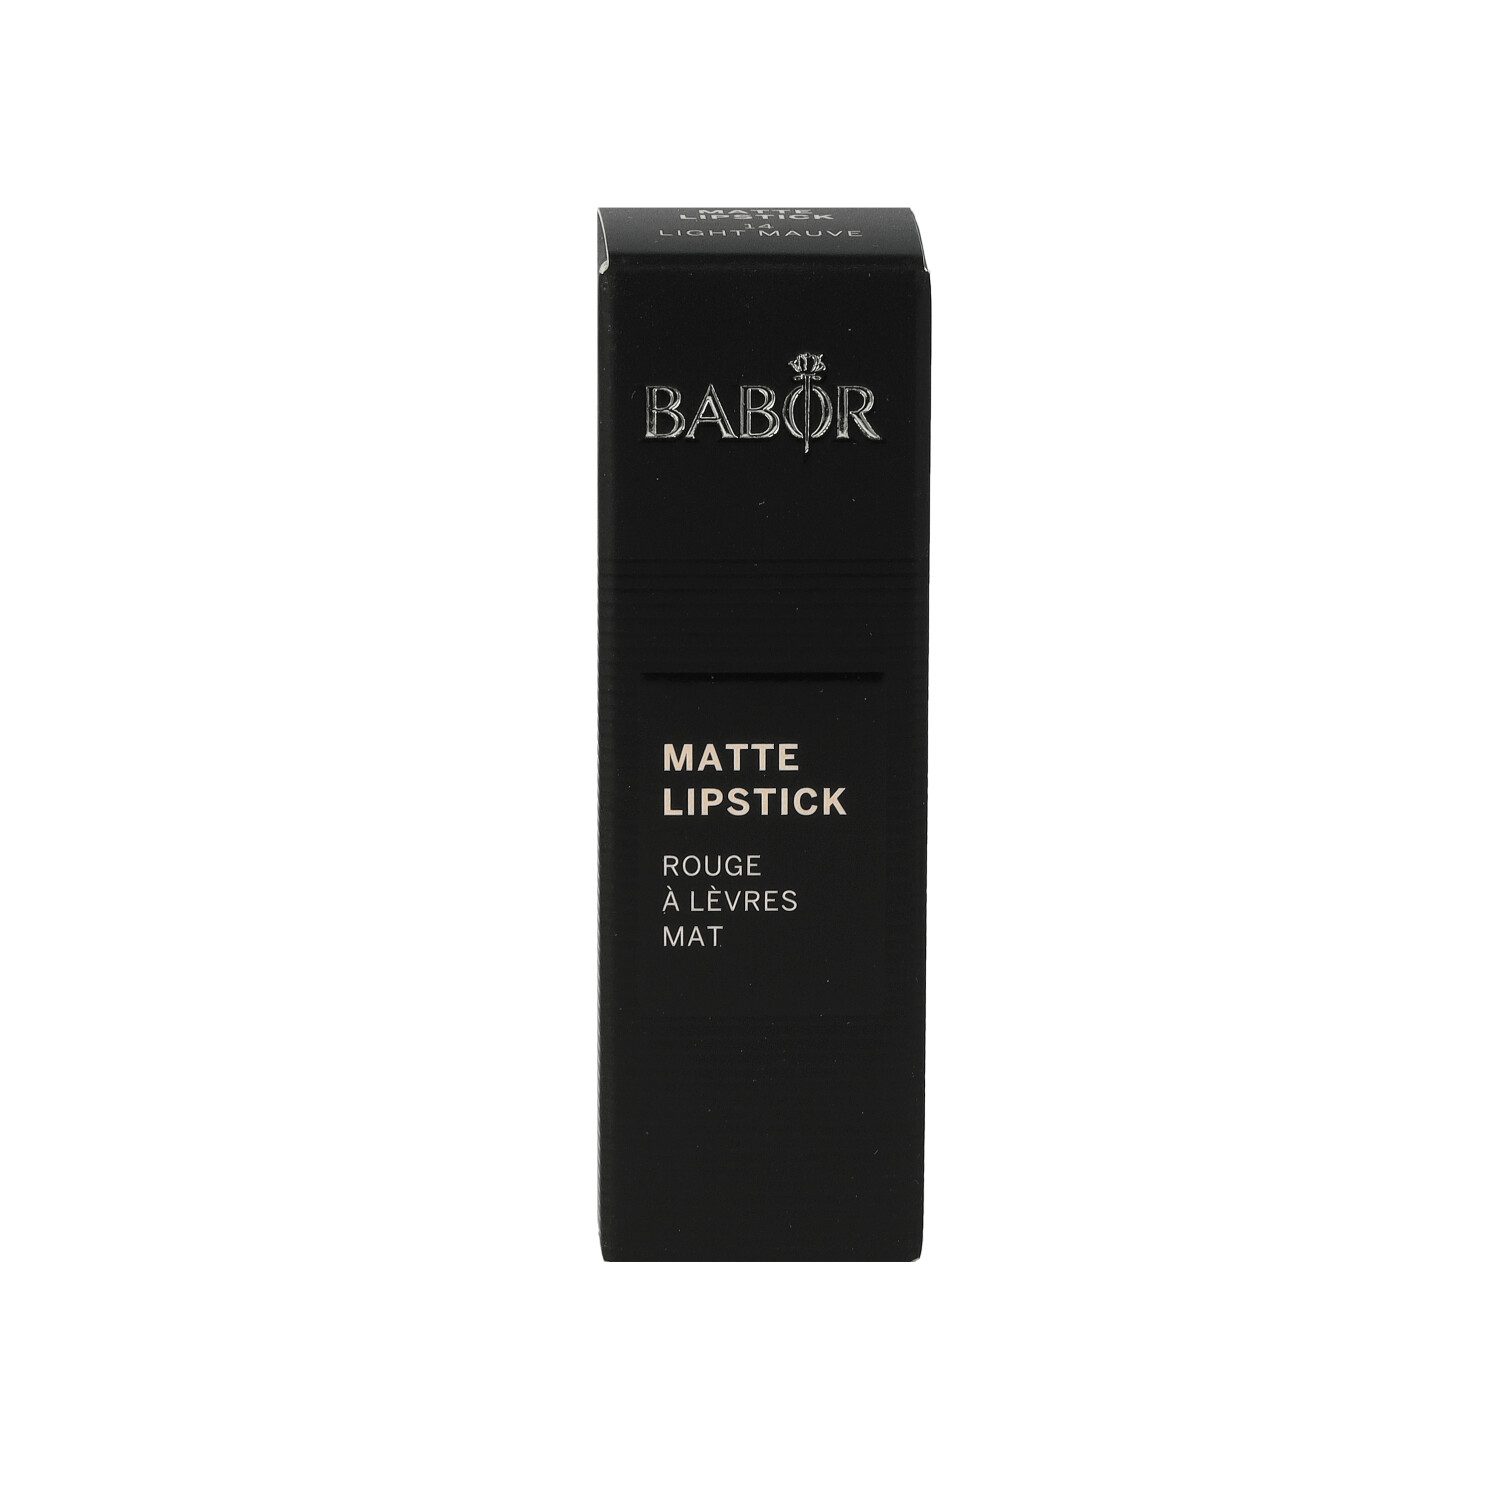 BABOR Matte Lipstick 14 light mauve